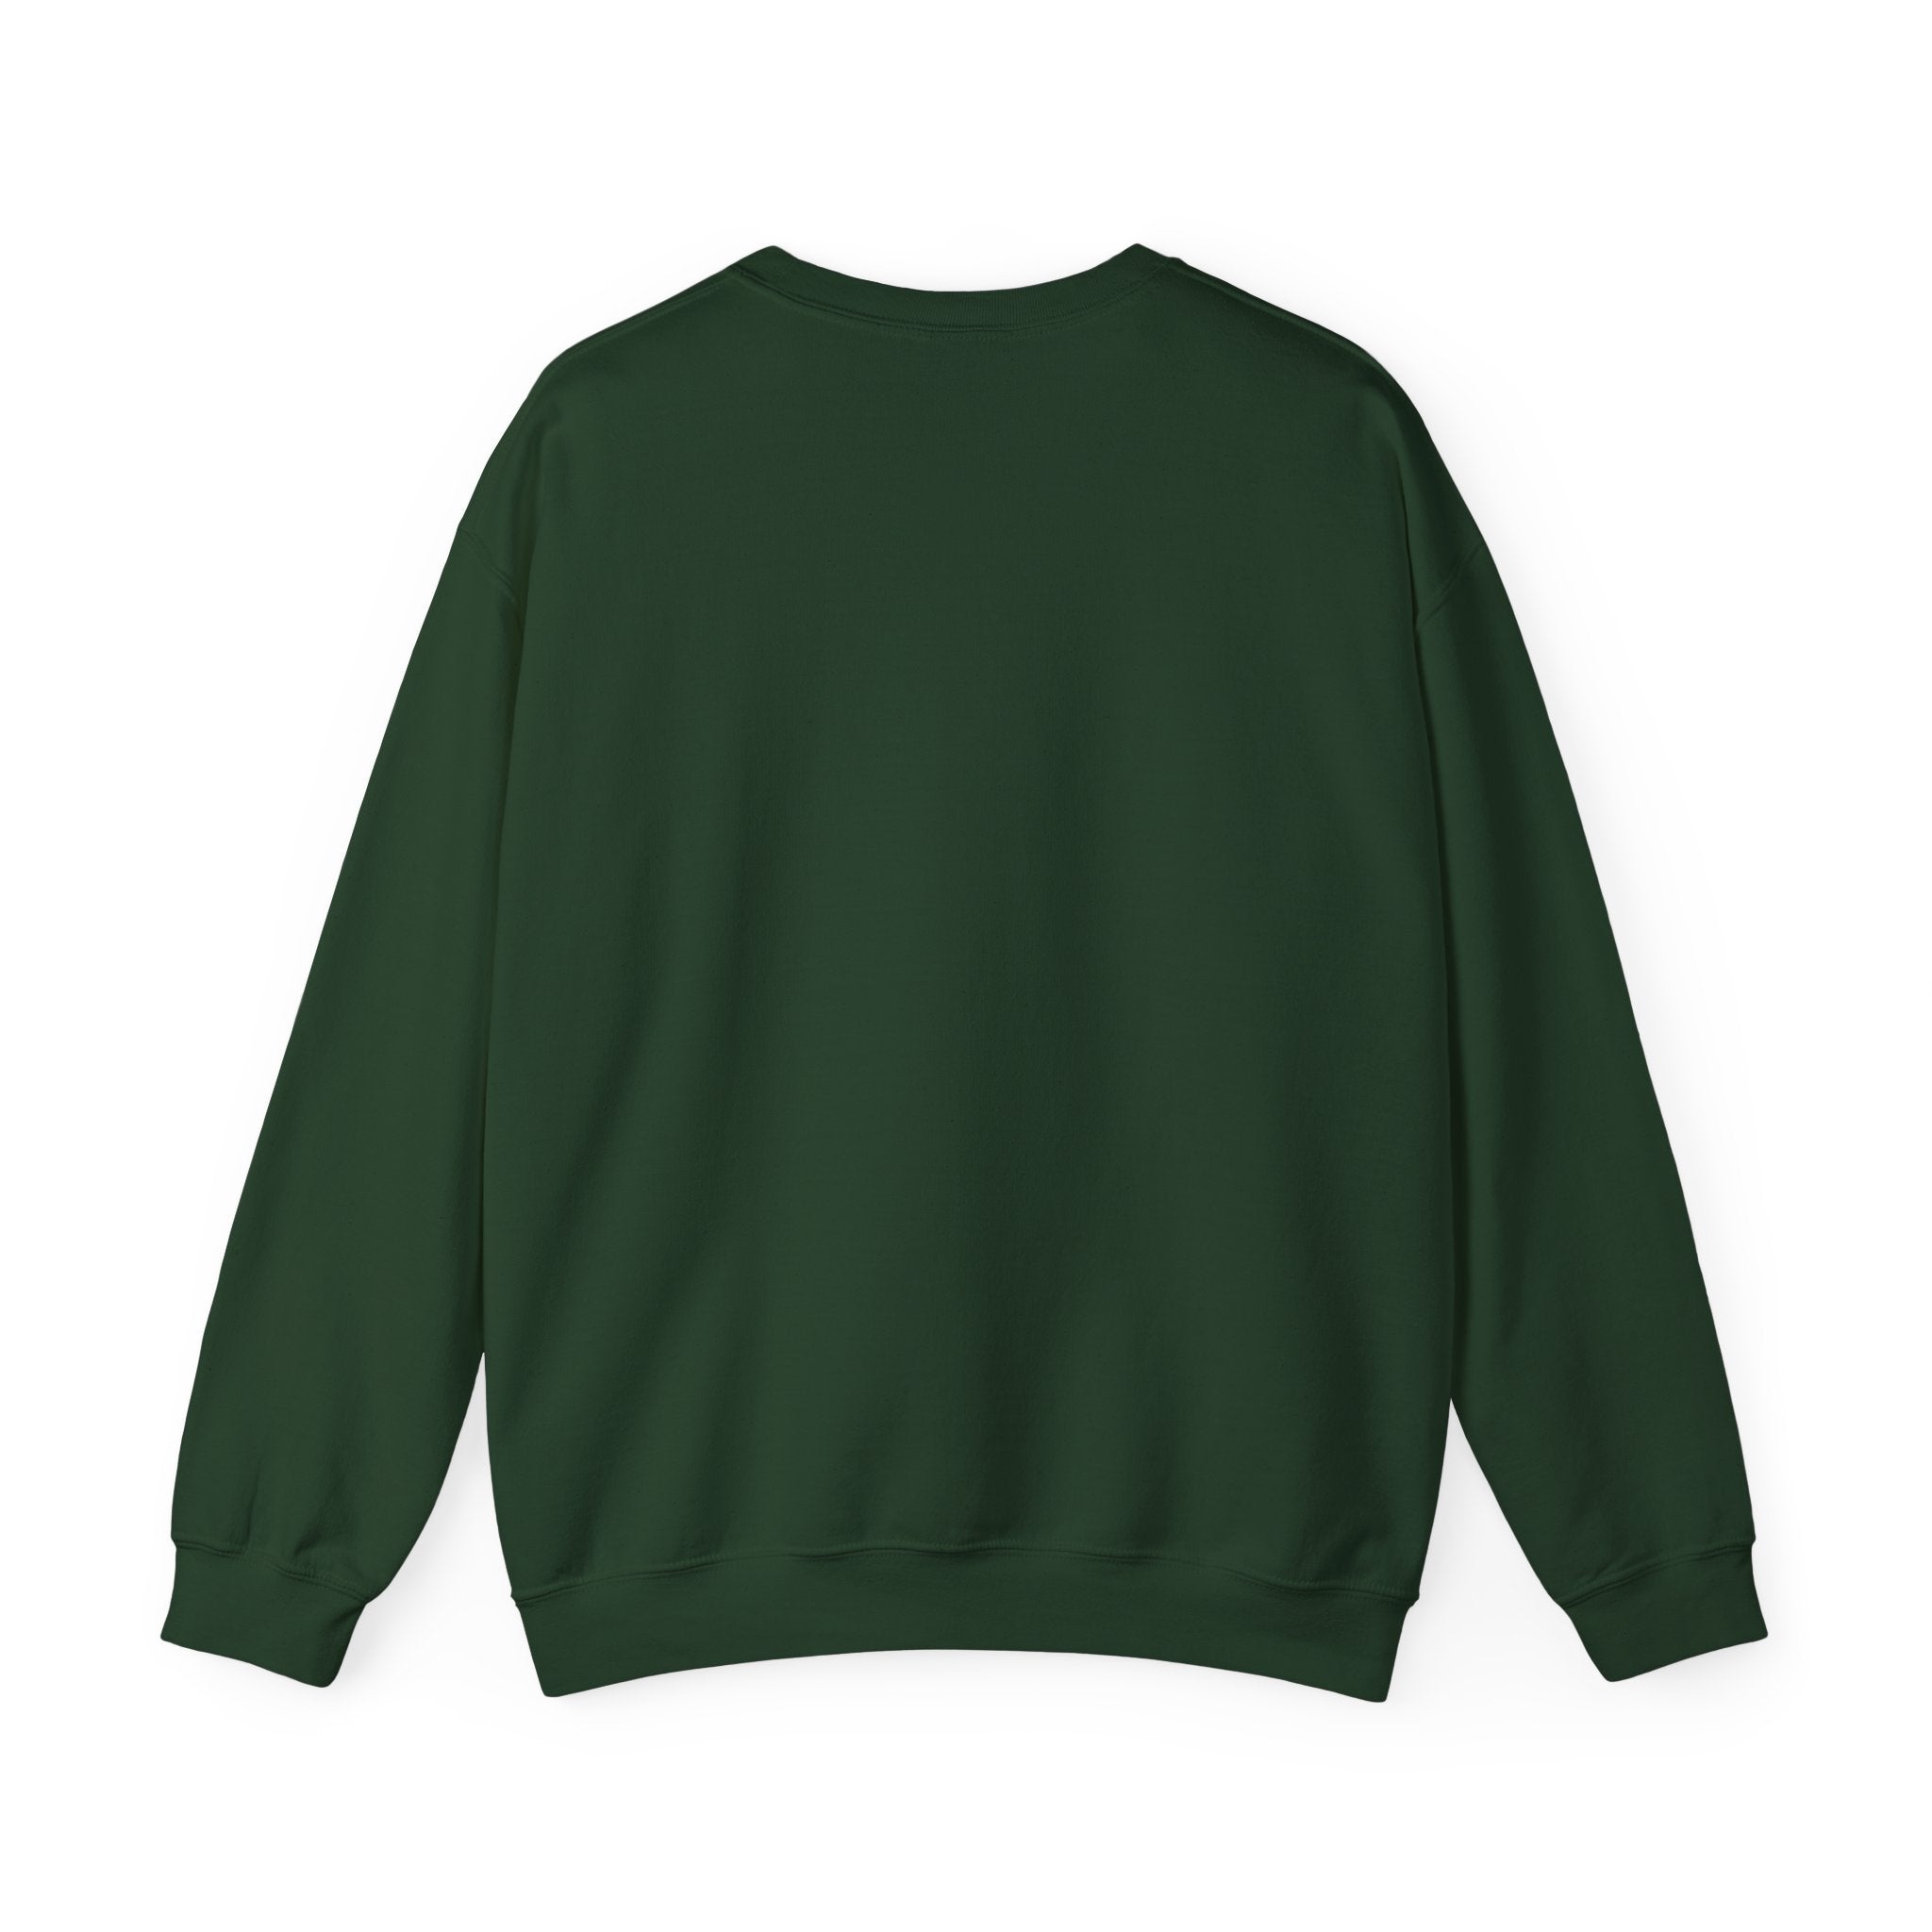 Inspirational Crewneck Sweatshirt, Womens Social Work Gift, Funny Teacher Sweater, Unisex Gift for Him Her